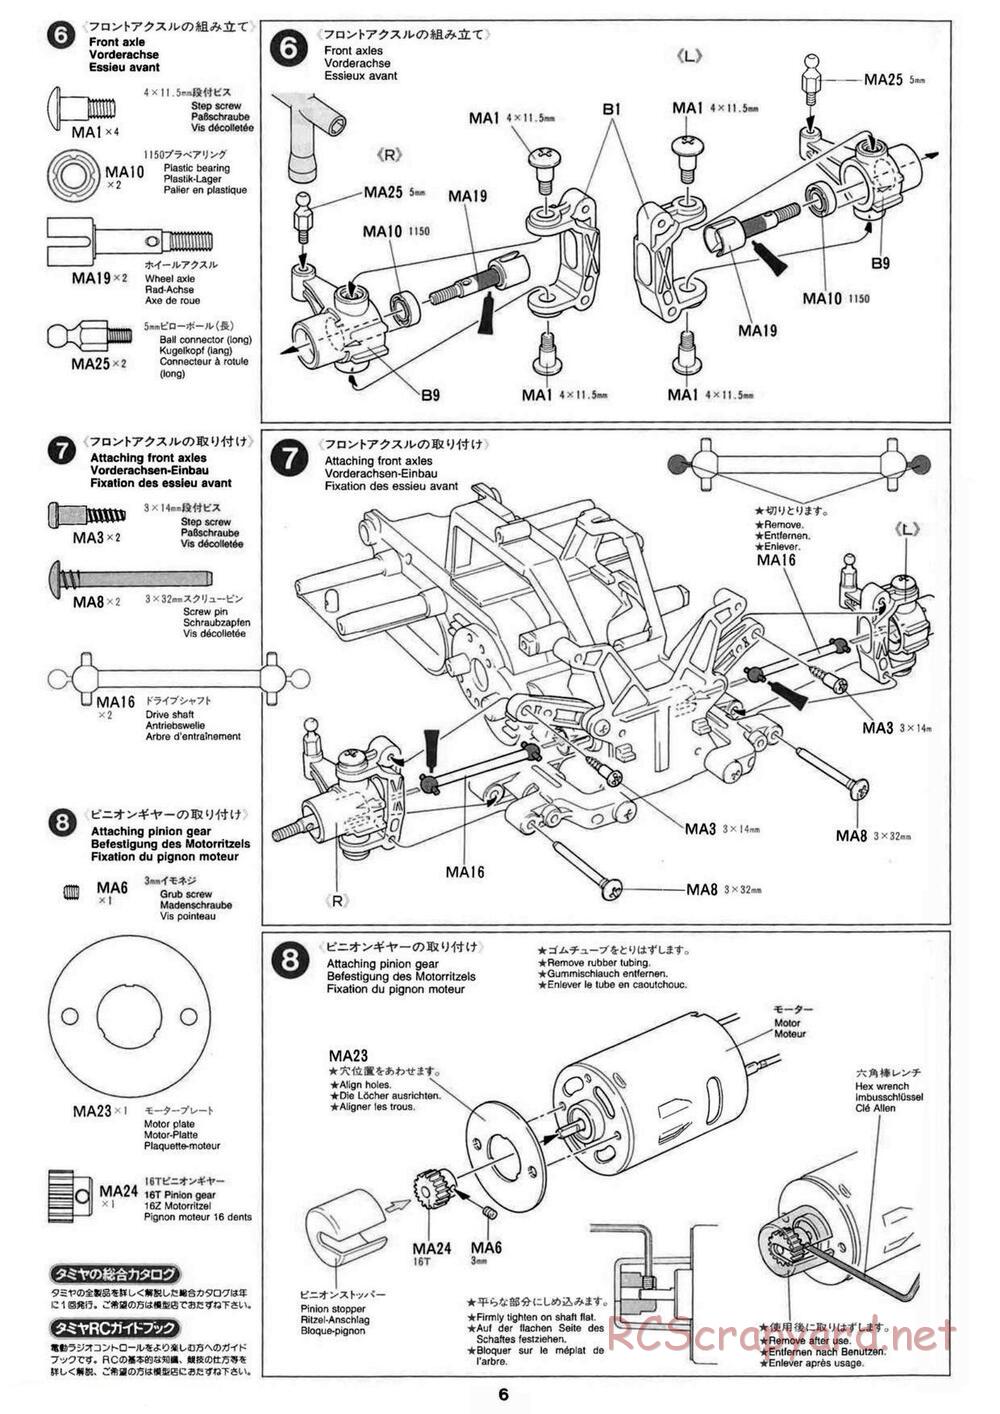 Tamiya - FF-02 Chassis - Manual - Page 6